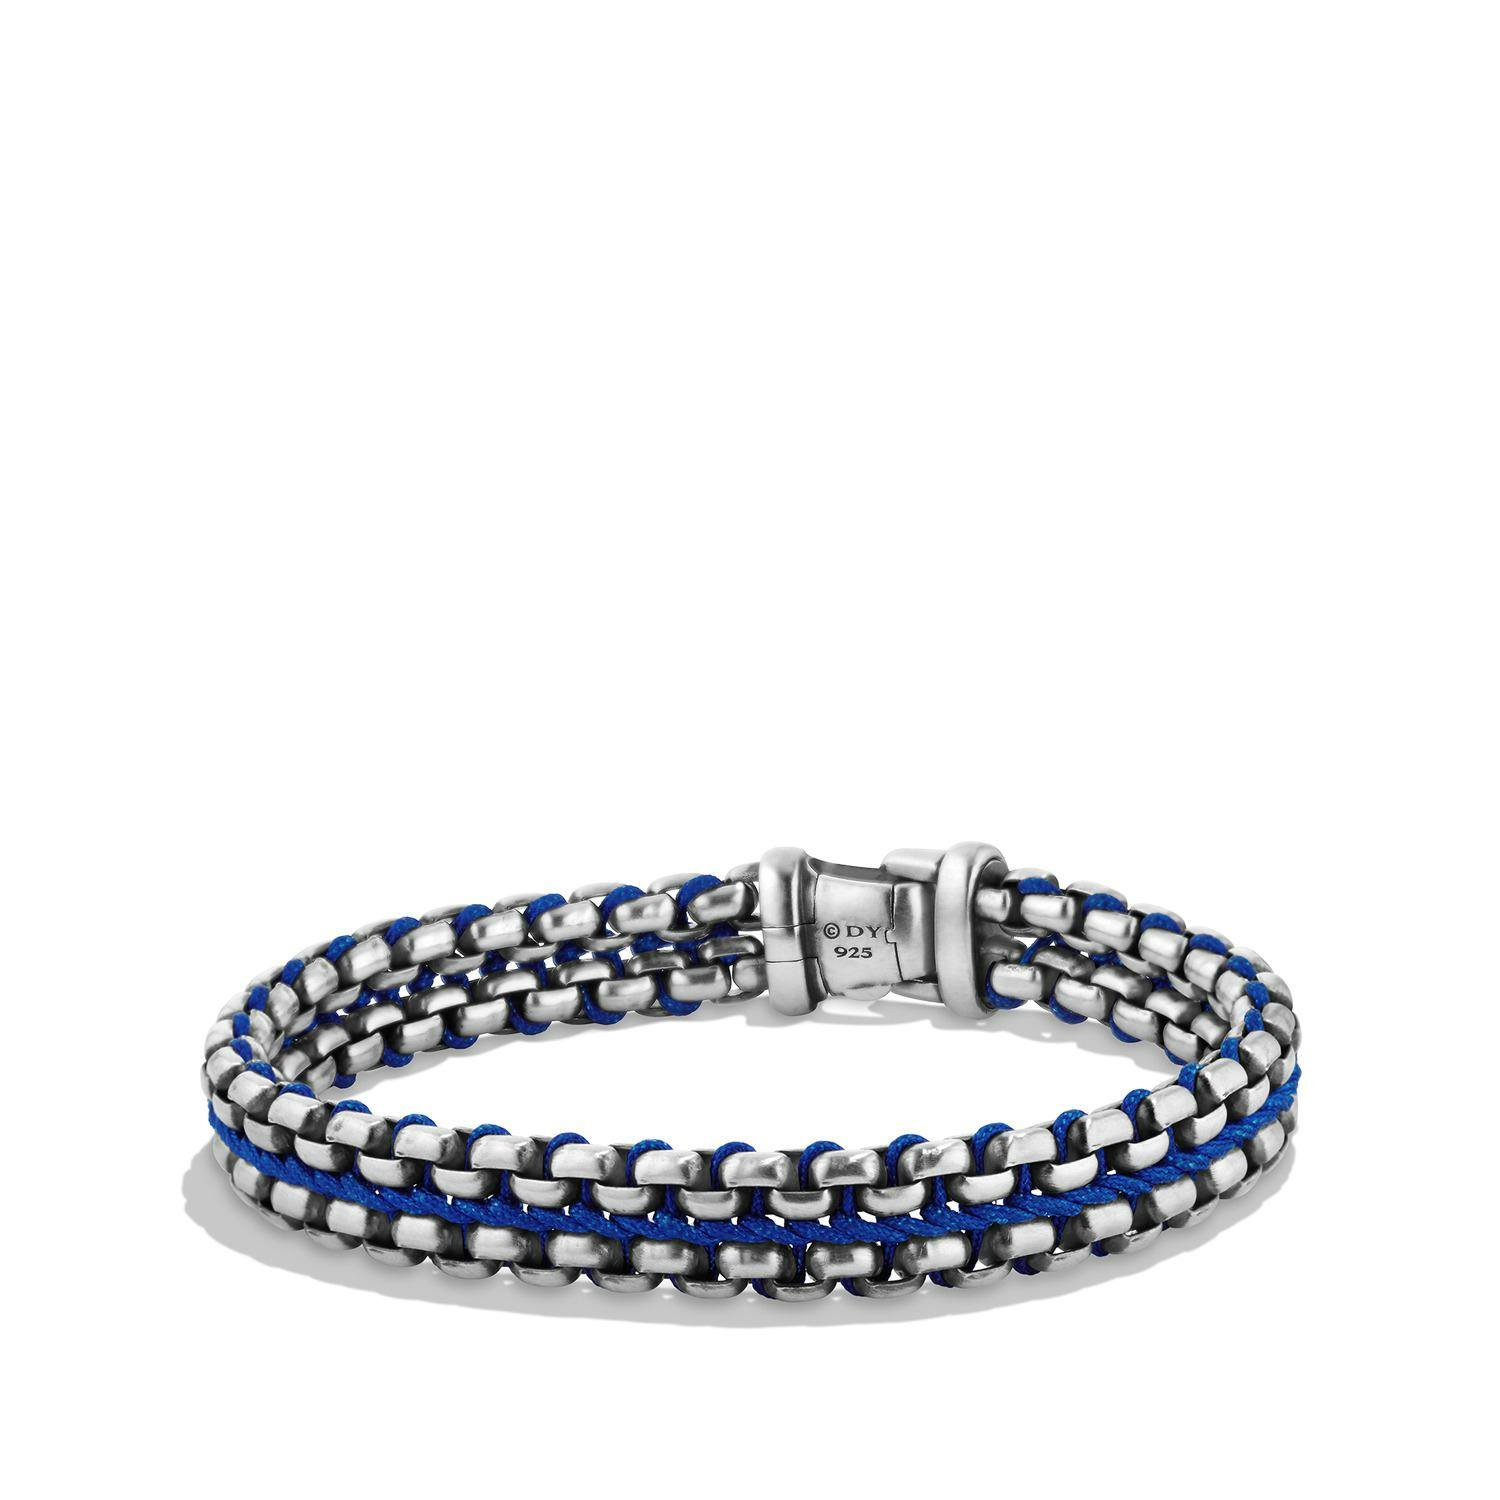 David Yurman Men's Woven Box Chain Bracelet with Blue Nylon, 12mm